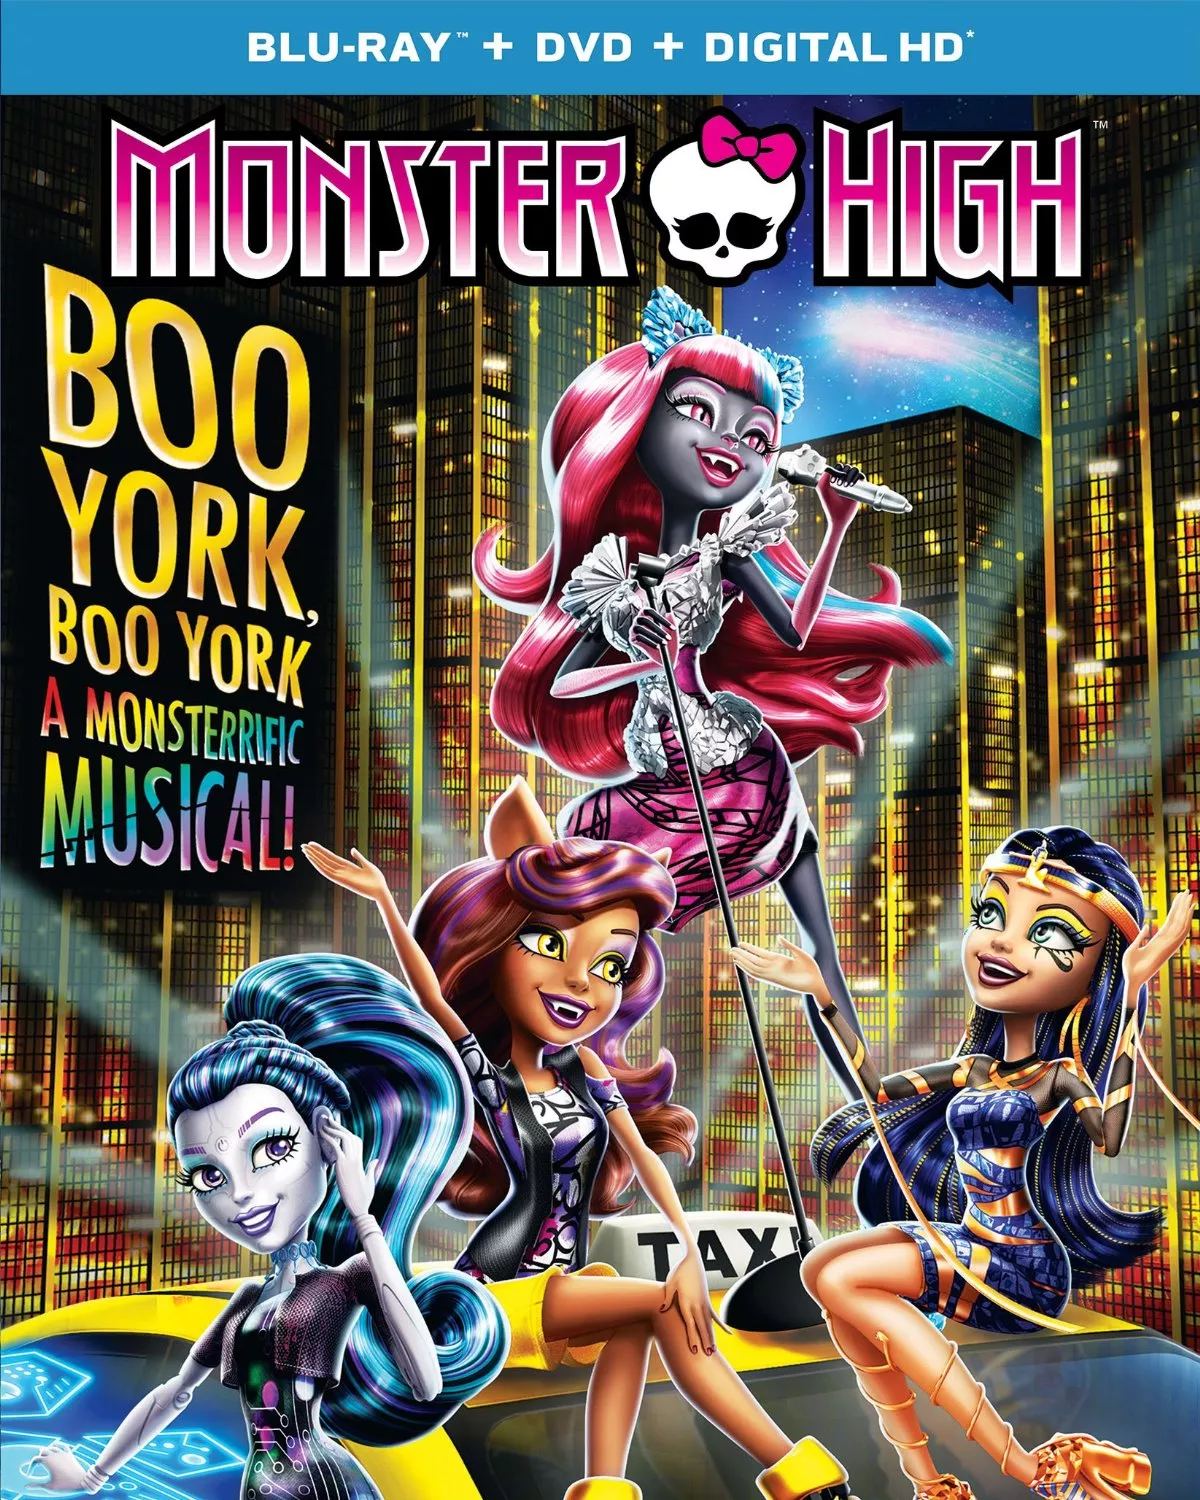 Monster High Boo York, Boo York (2015) มอนสเตอร์ ไฮ มนต์เพลงเมืองบูยอร์ค